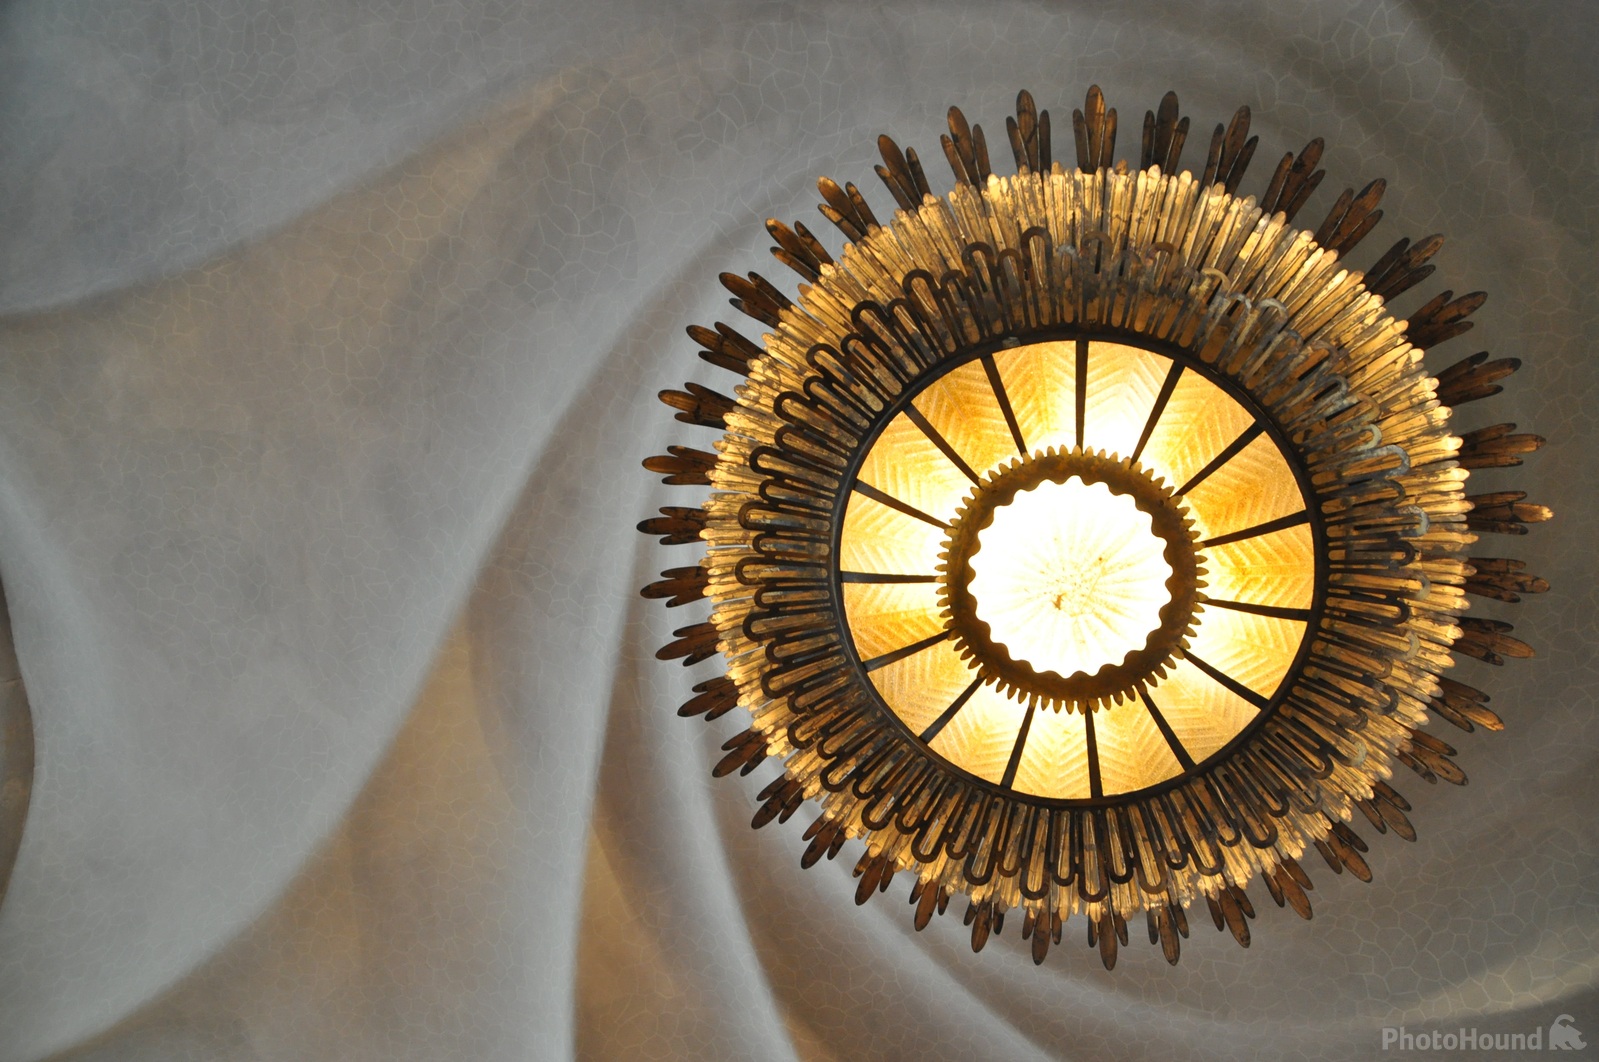 Image of Casa Batlló - Interior by Team PhotoHound